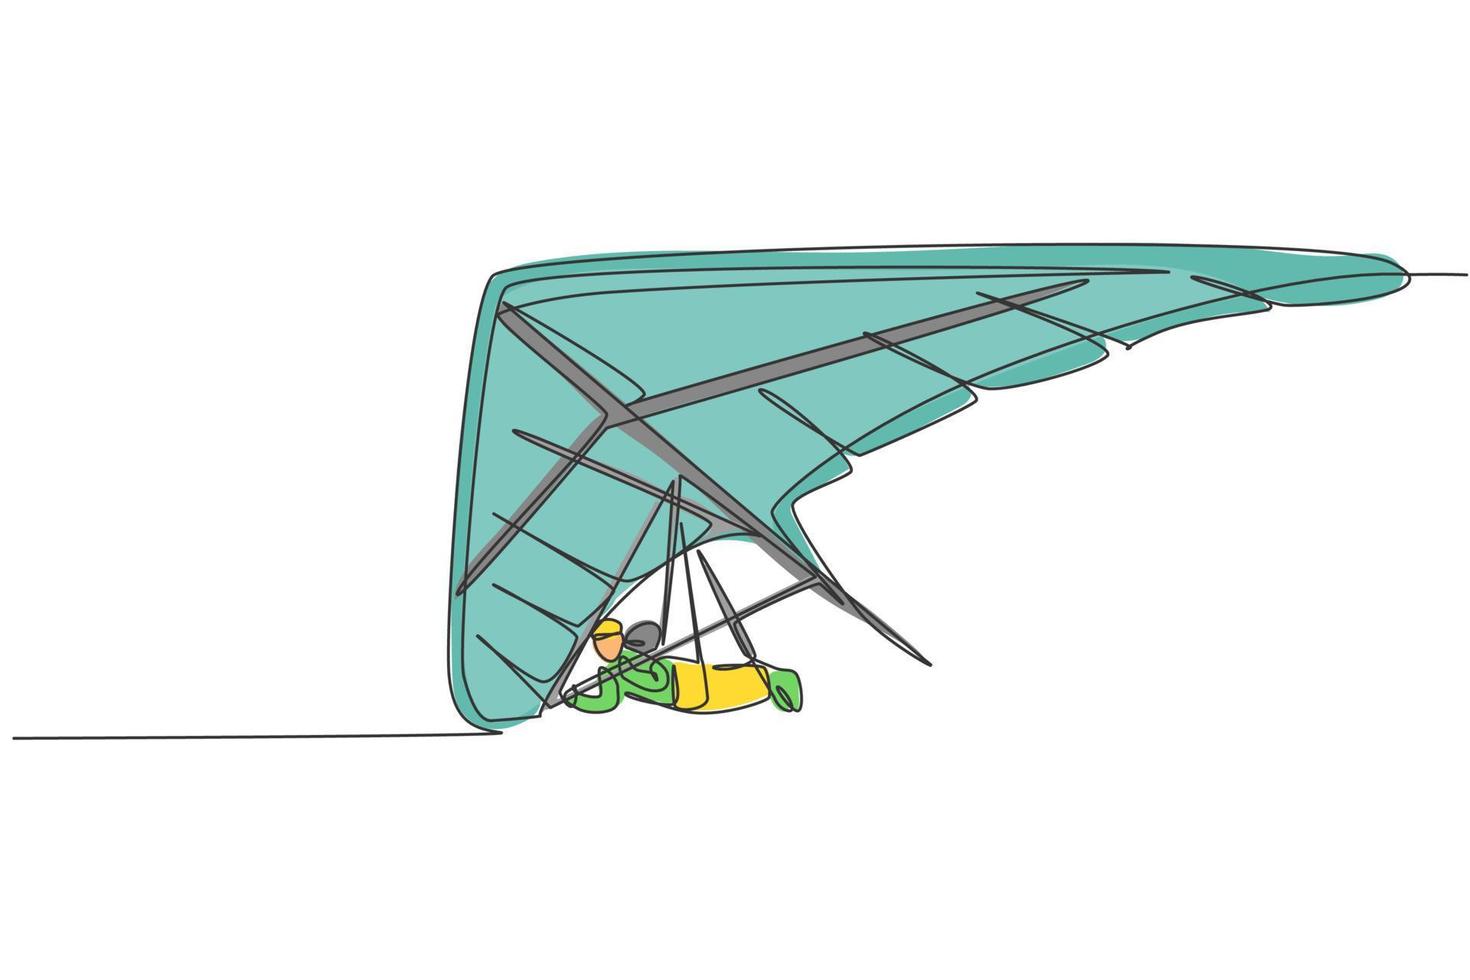 en enda linjeteckning av ung sportig man som flyger med hängglidskärm på himlen grafisk vektorillustration. extrem sport koncept. modern kontinuerlig linjeritningsdesign vektor